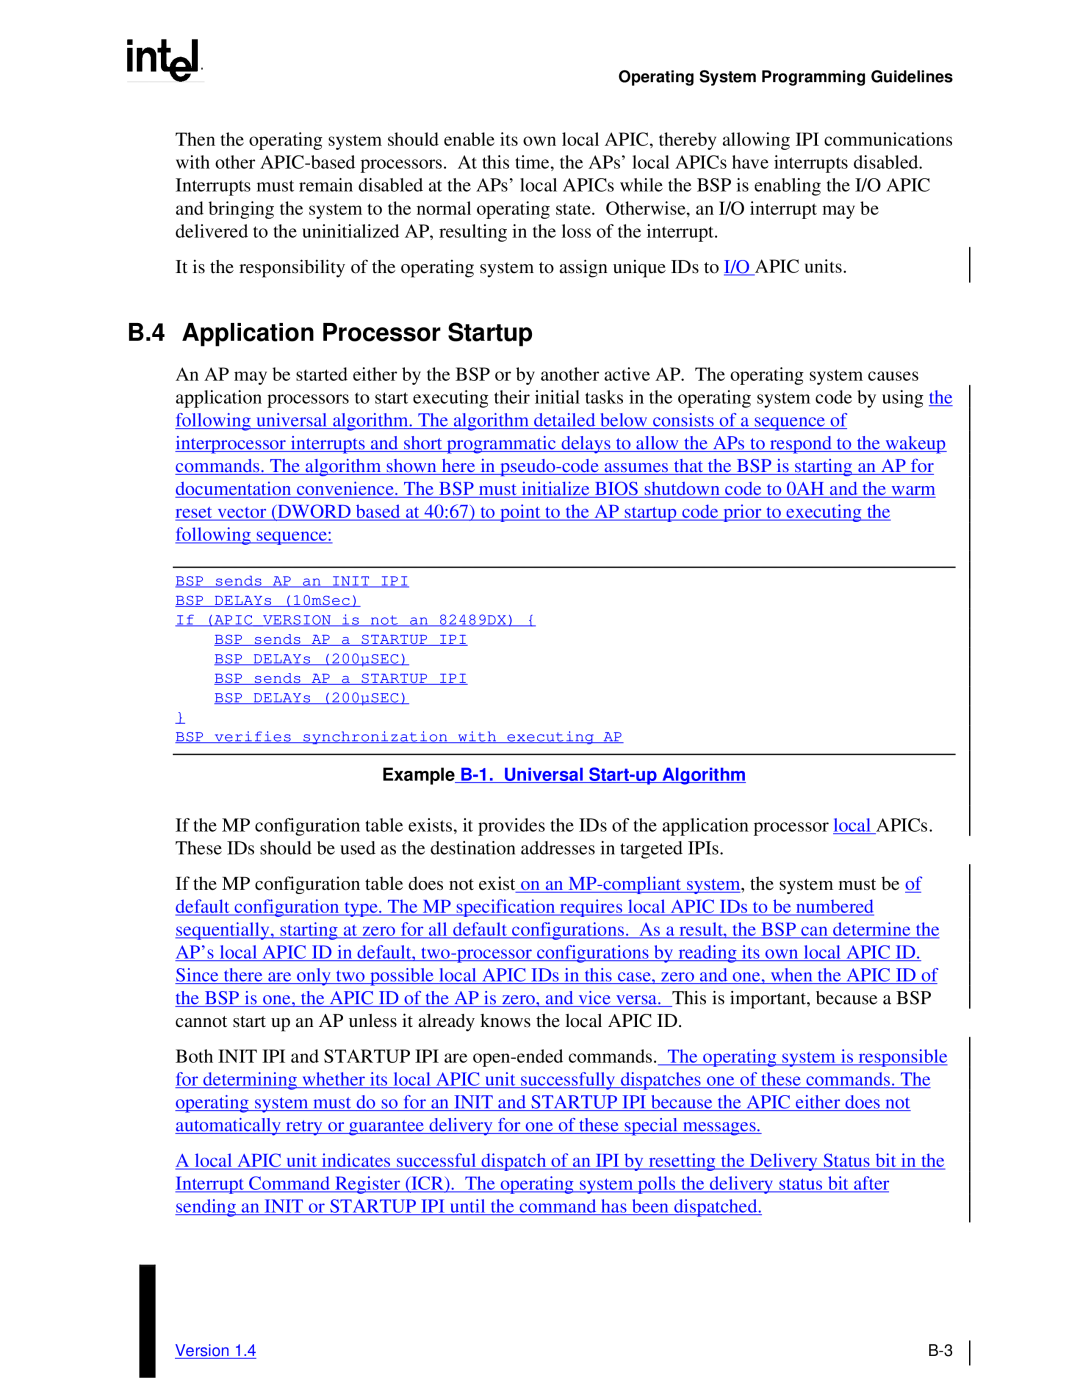 Intel MultiProcessor manual B.4 Application Processor Startup, Example B-1.Universal Start-upAlgorithm 